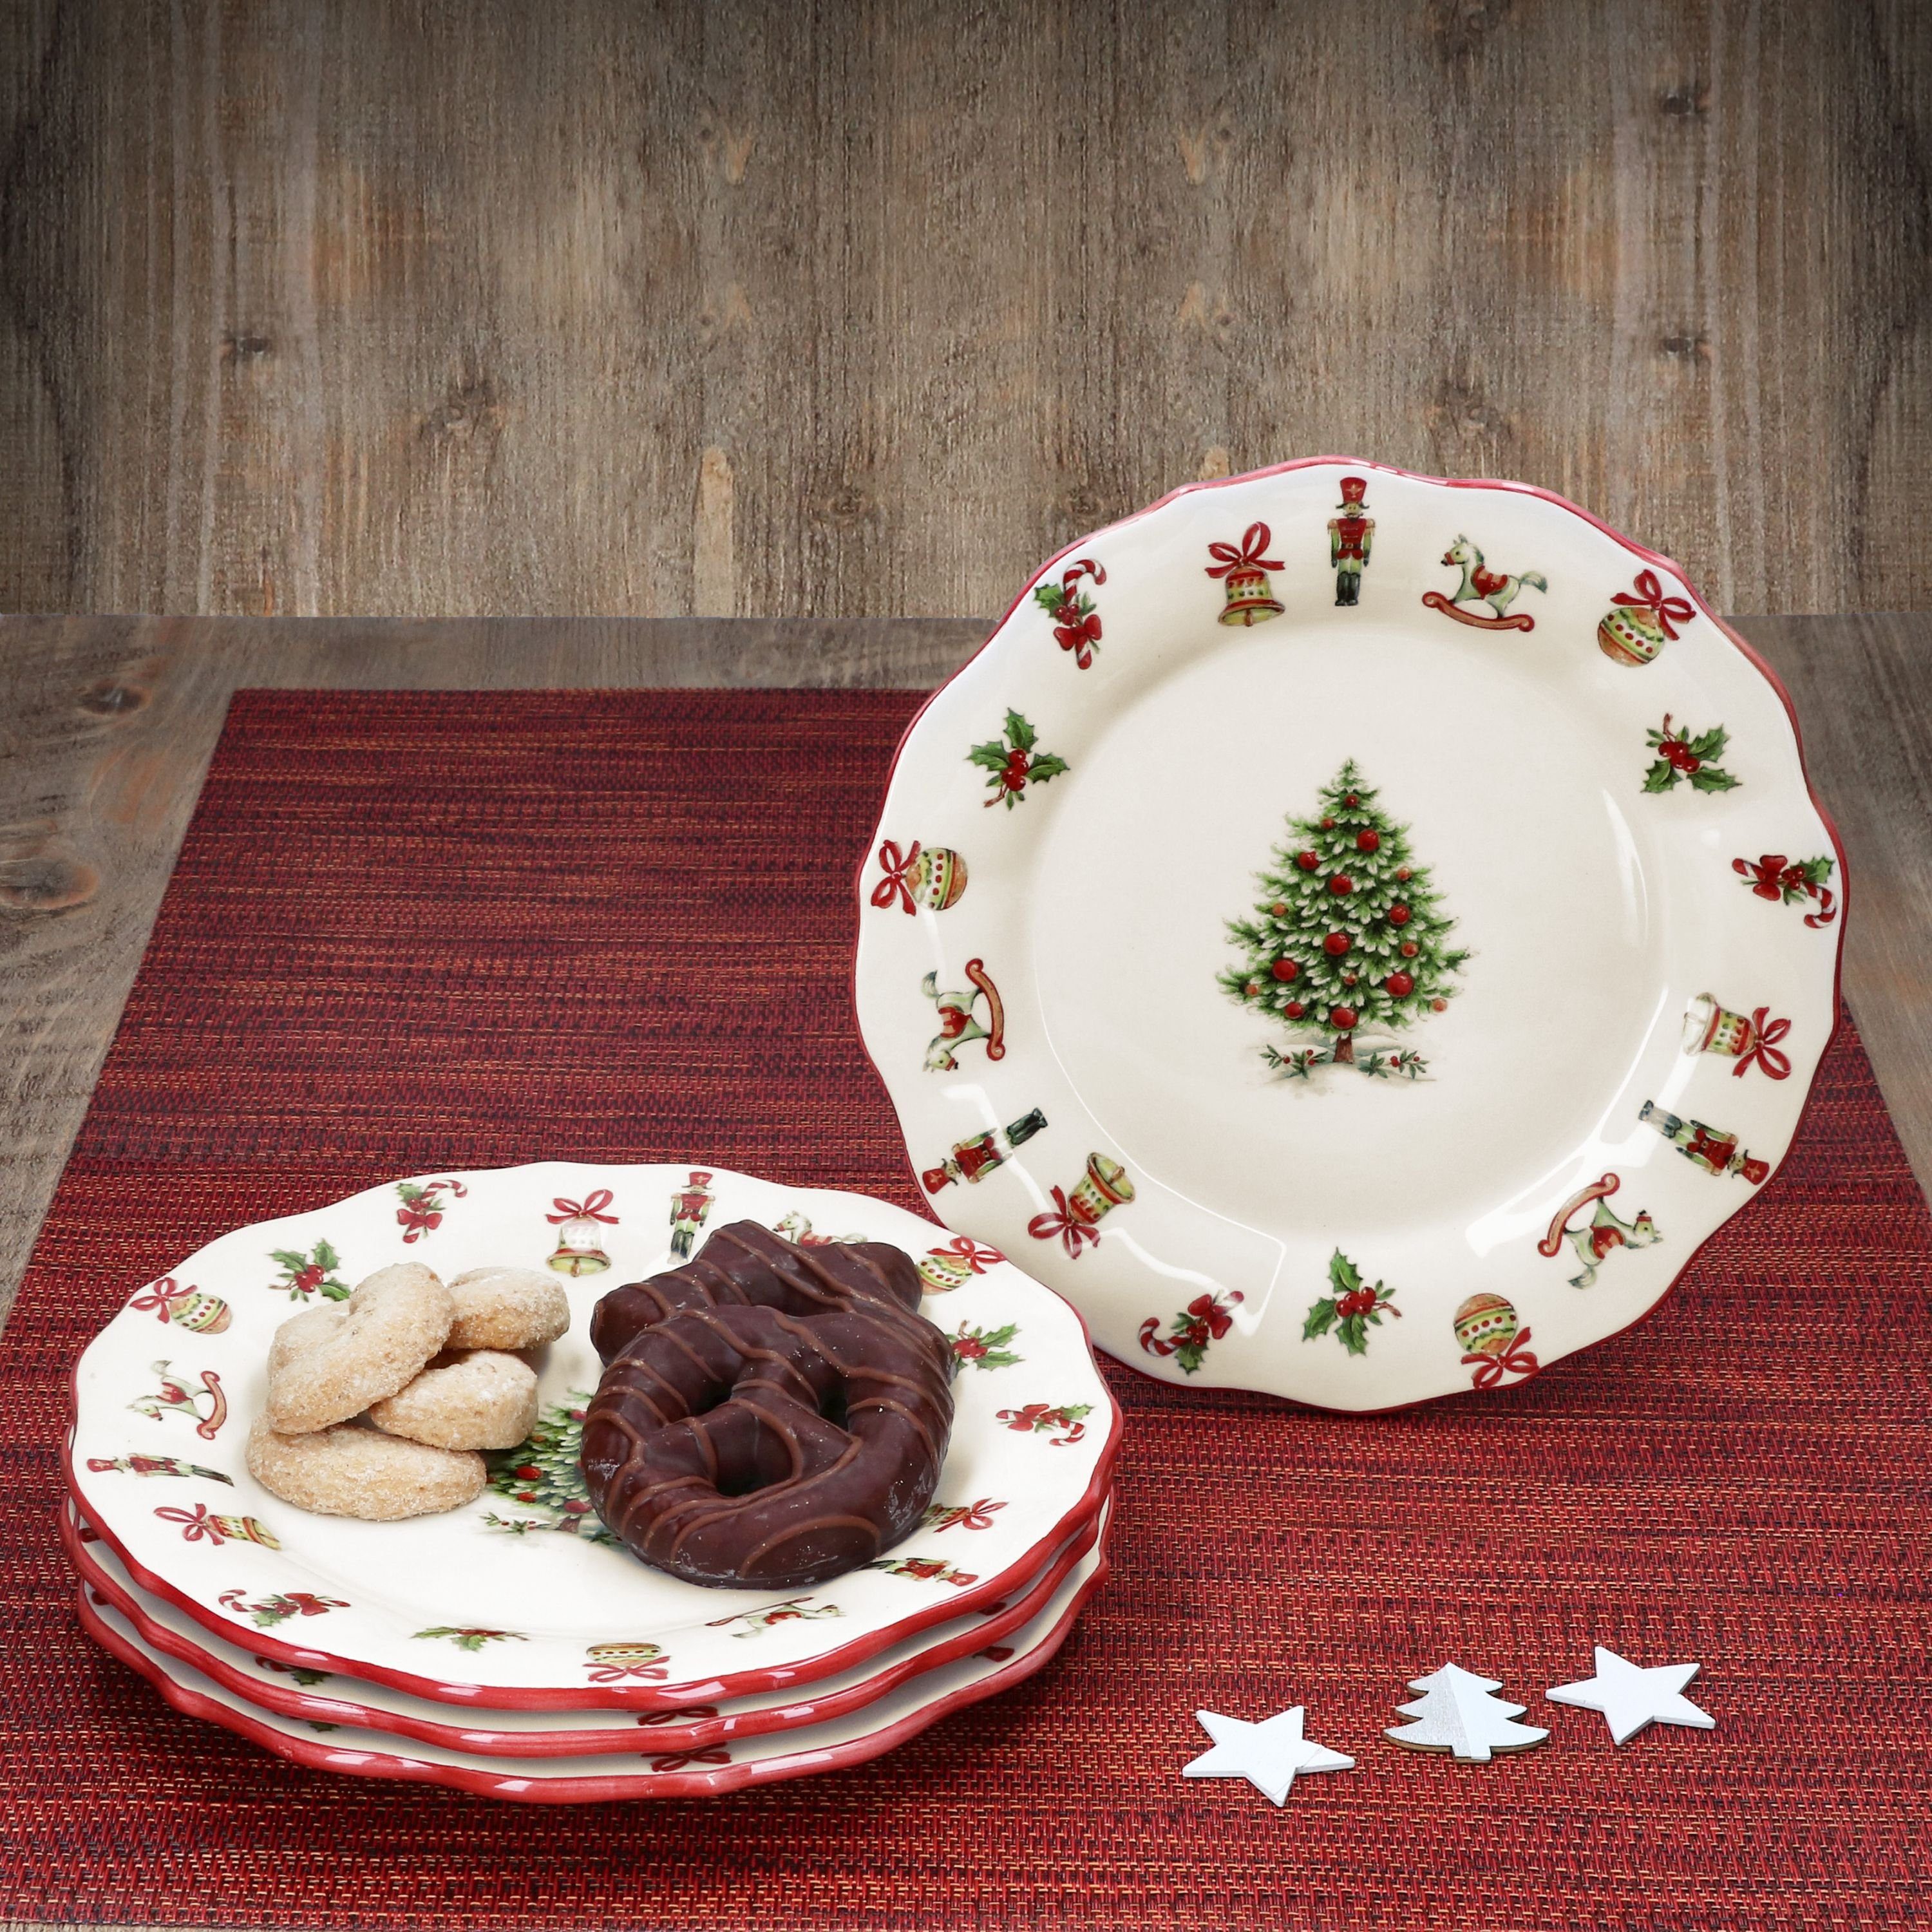 Maestro 4x Weihnachten MamboCat Keramik Frühstücksteller Natale Dessert-Teller Kuchenteller